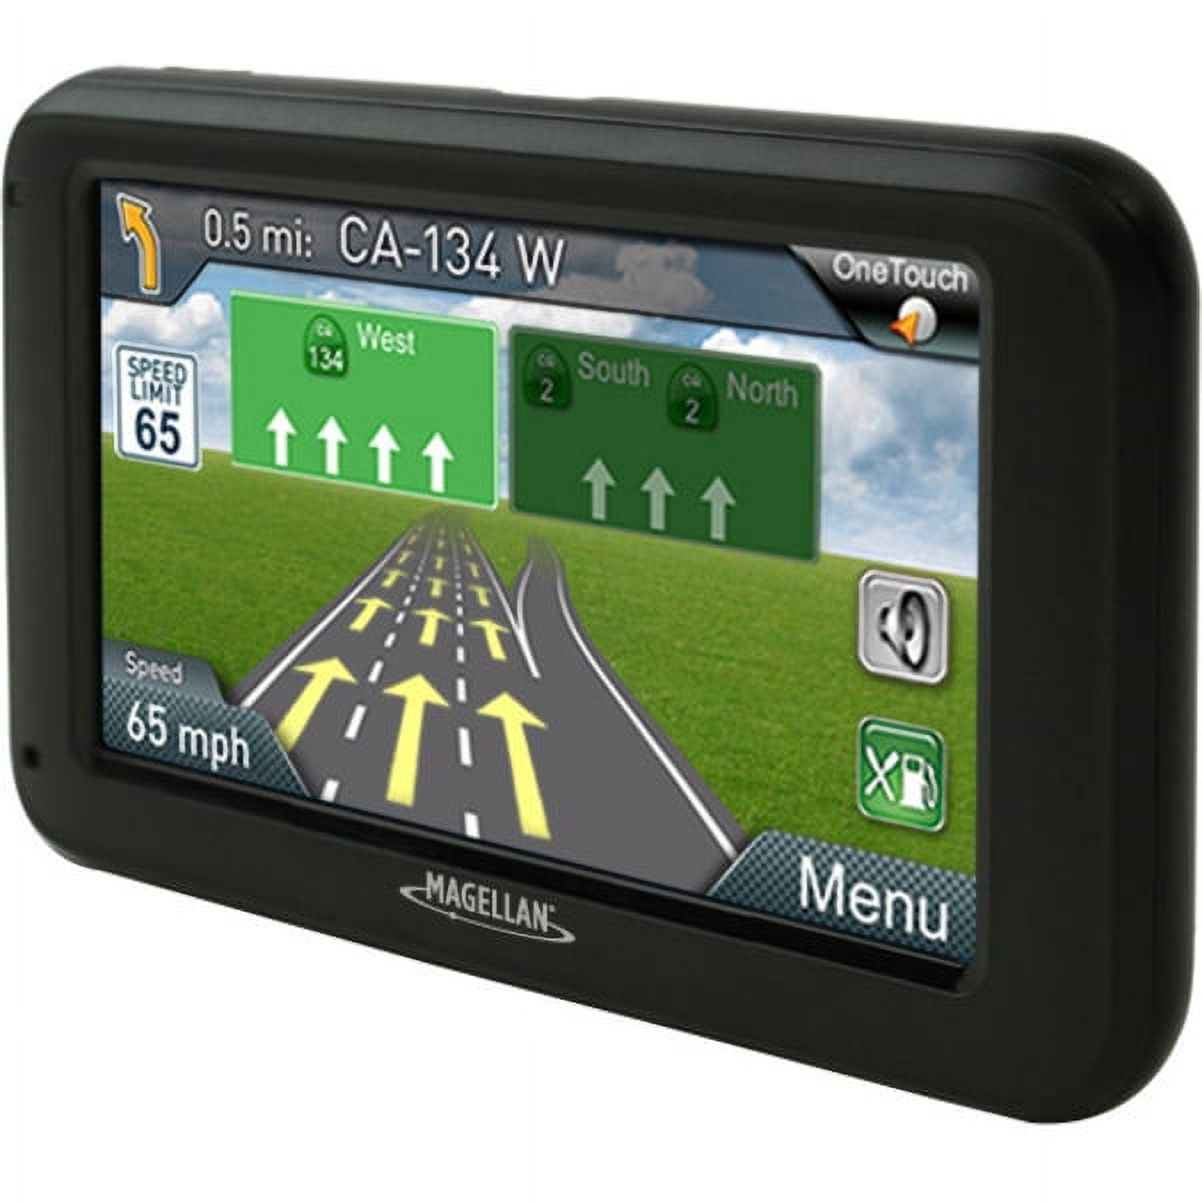 Magellan RoadMate 2220-LM Automobile Portable GPS Navigator - image 3 of 4